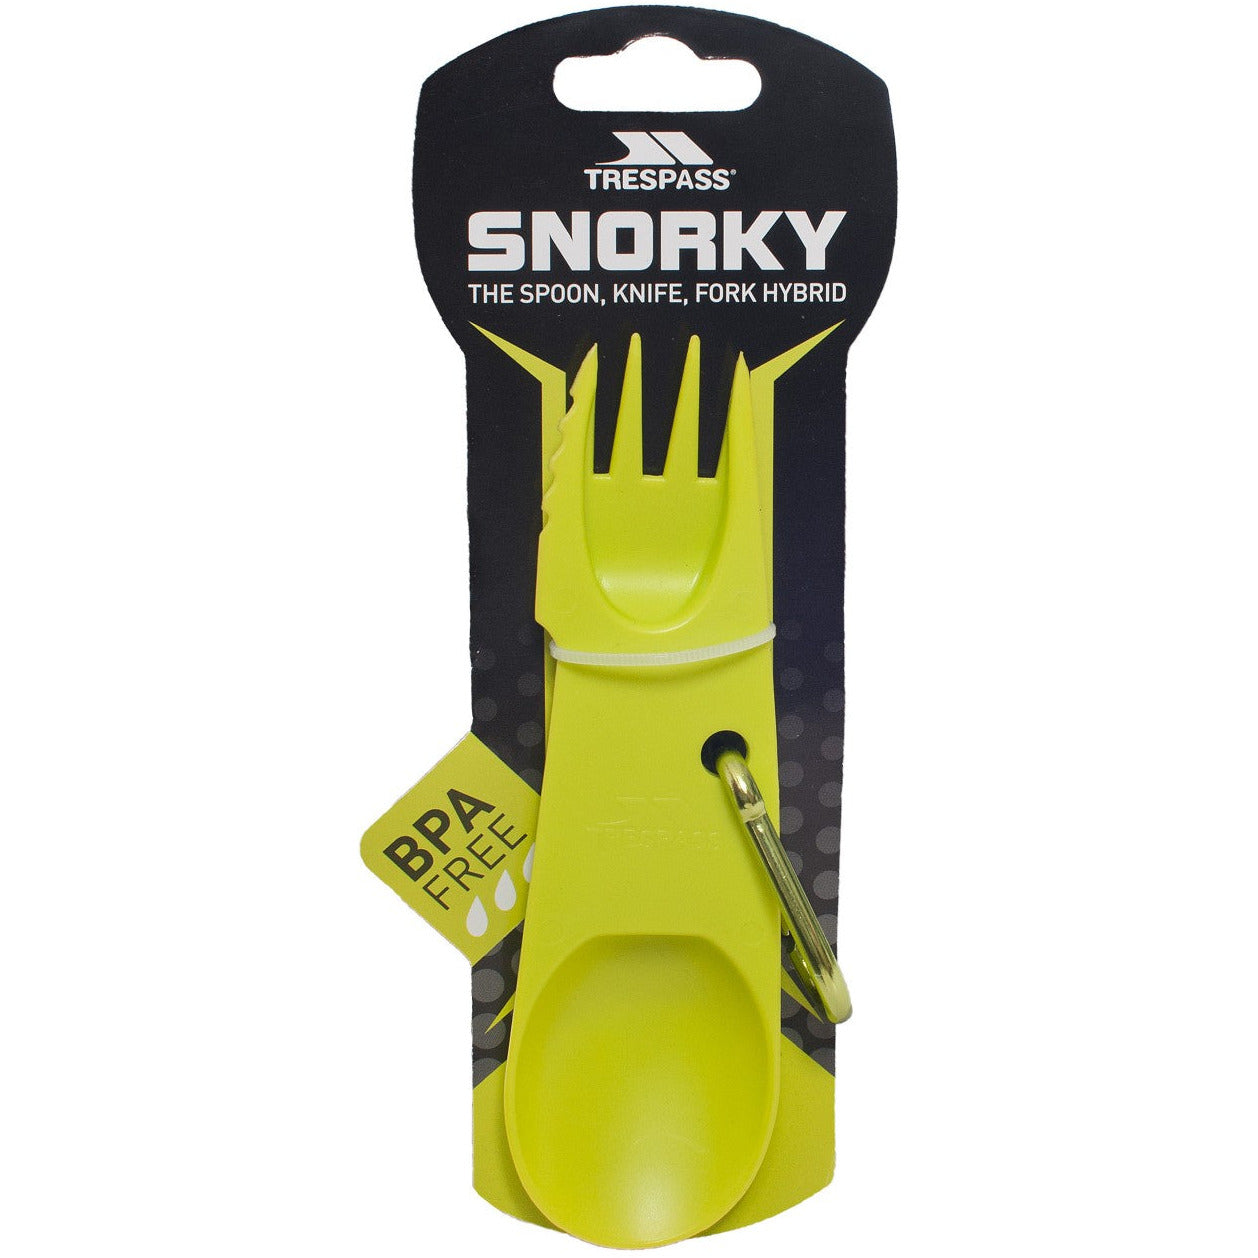 Snorky 3 In 1 Camping Utensil - Green